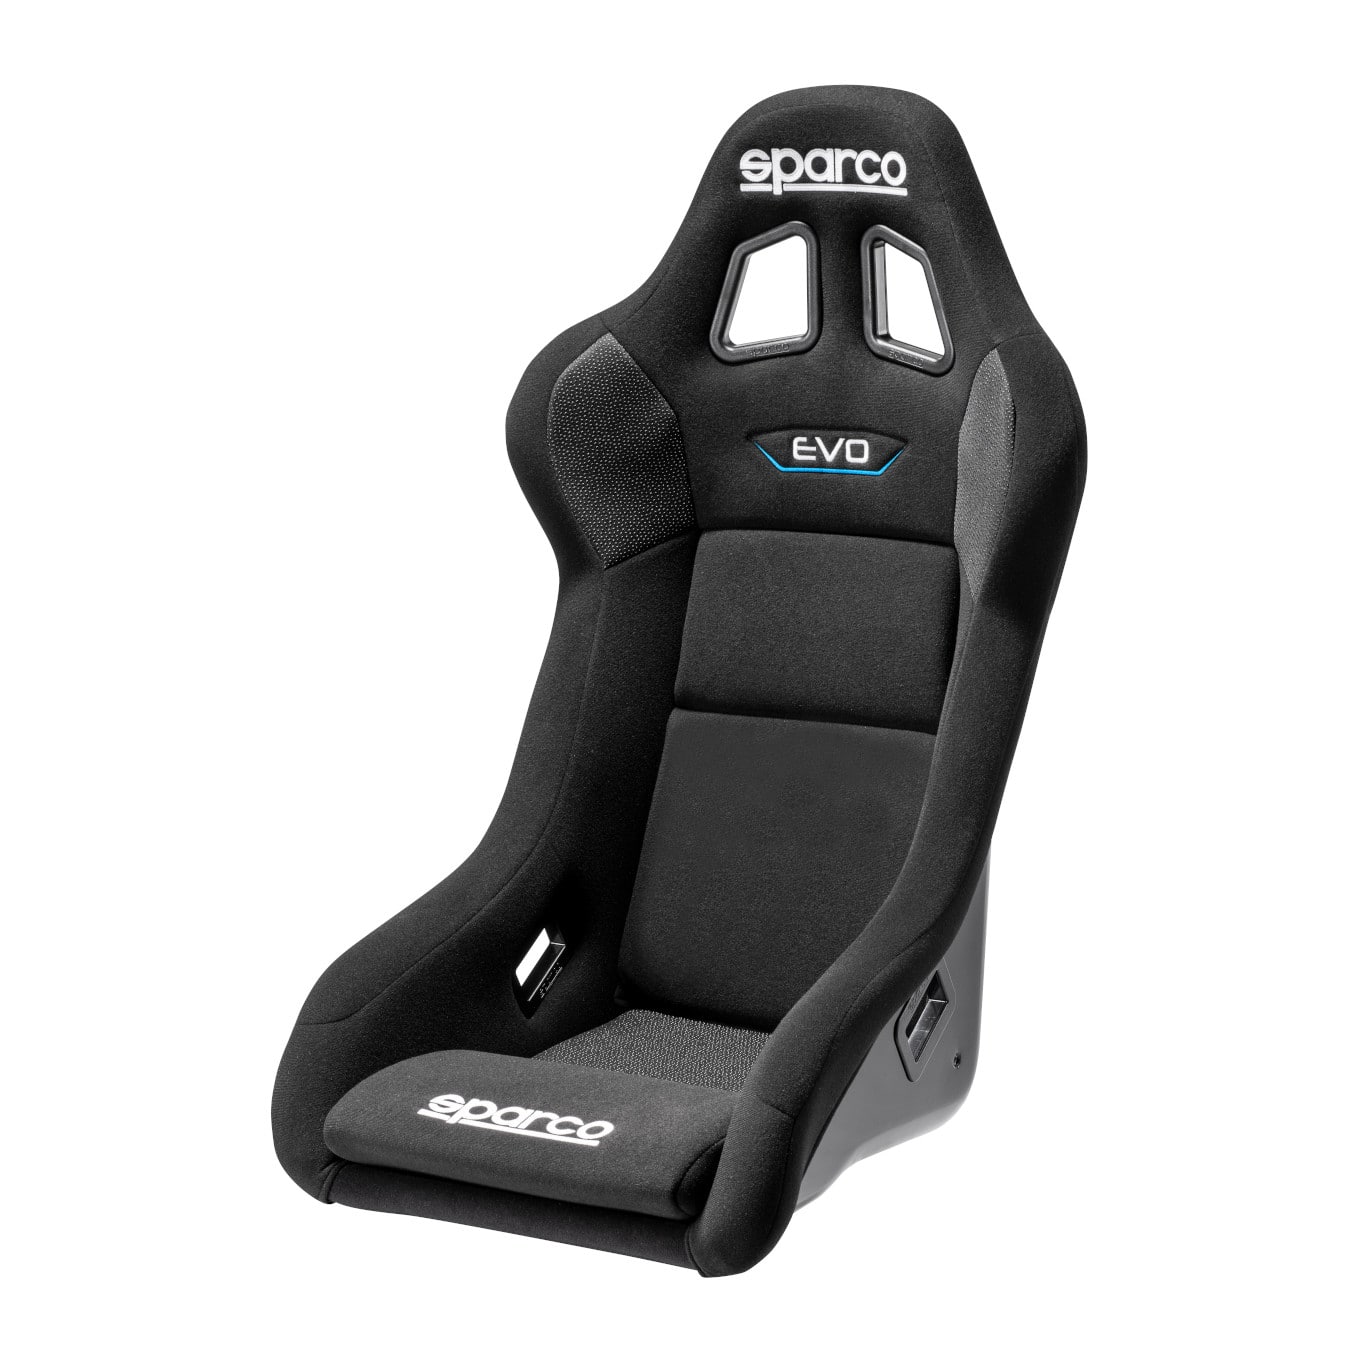 Sparco EVO Racing Seat 008007RNR